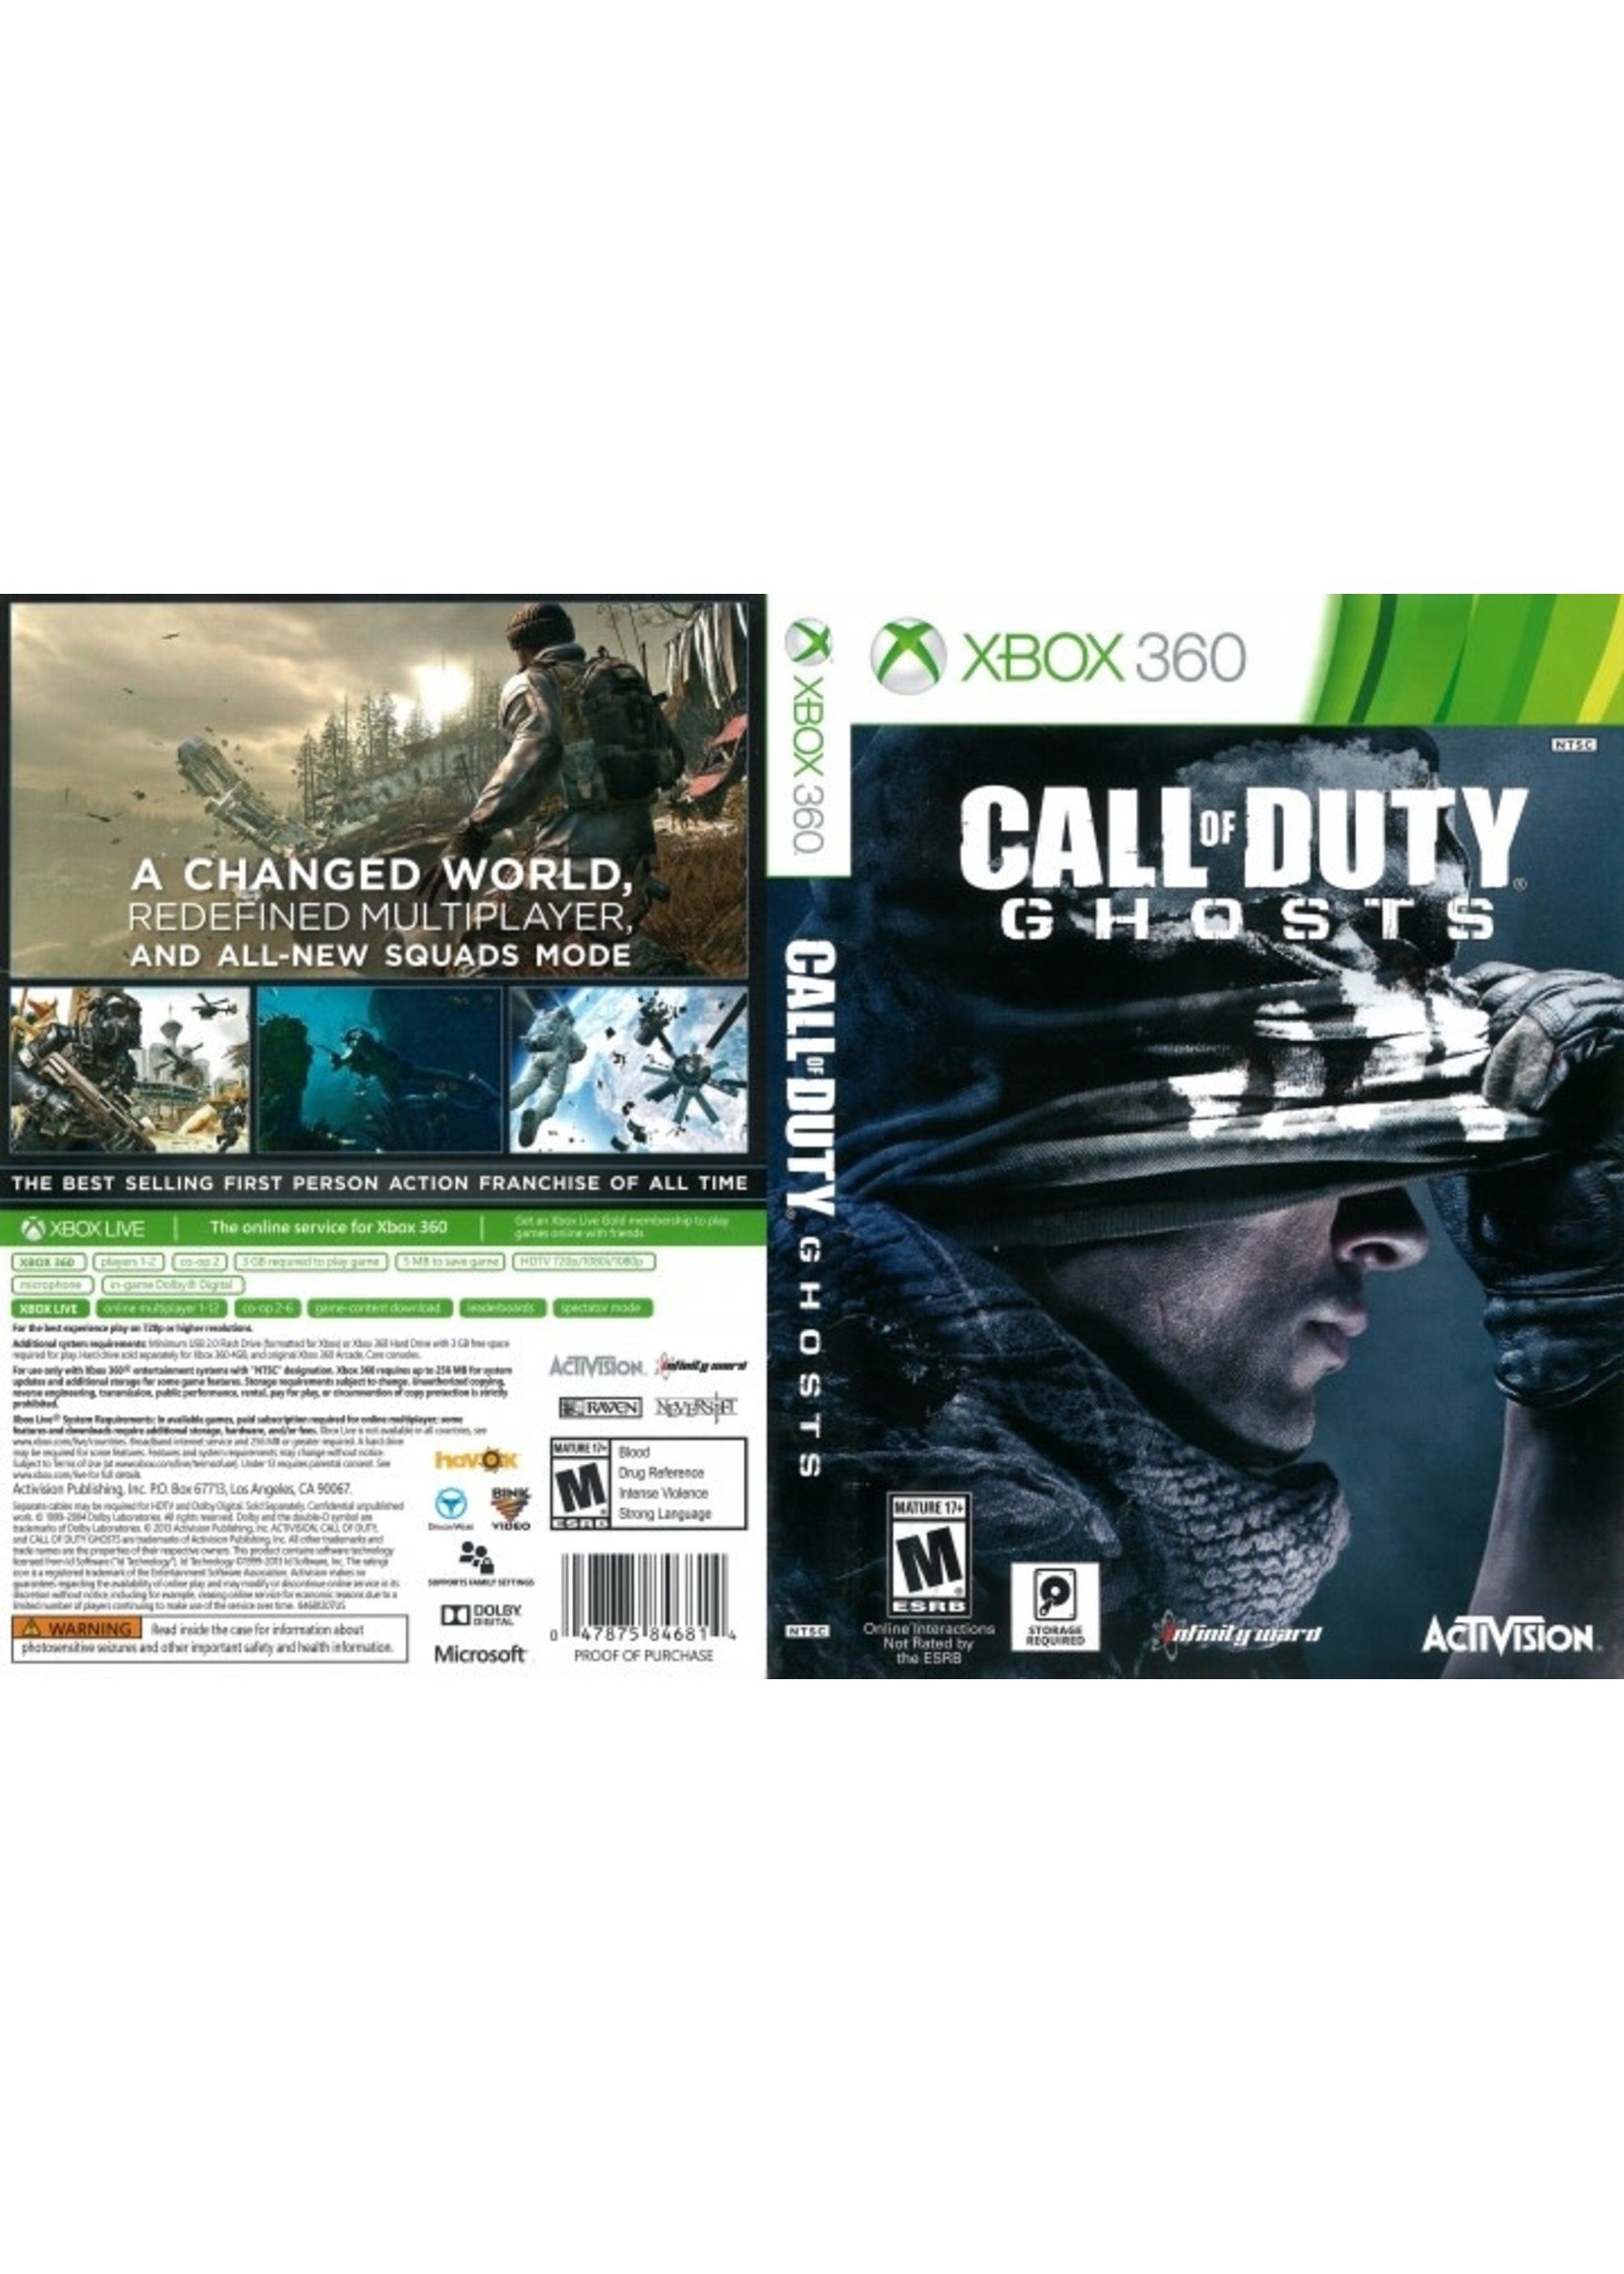 Microsoft Xbox 360 Call of Duty Ghosts